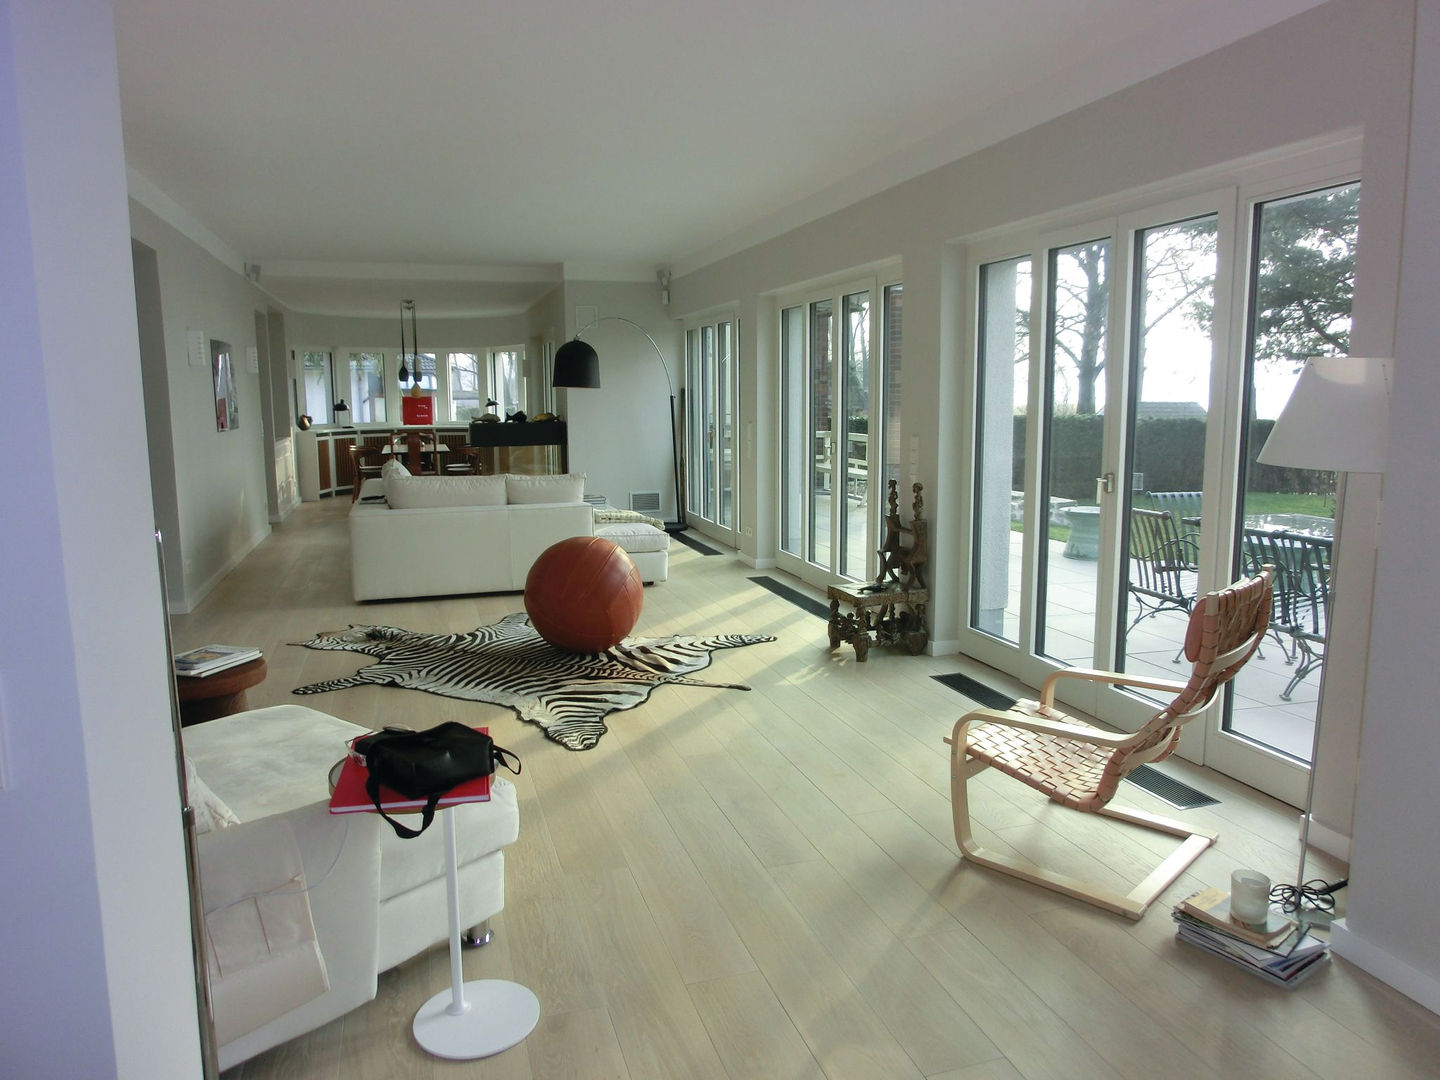 Living Room tredup Design.Interiors Modern Living Room